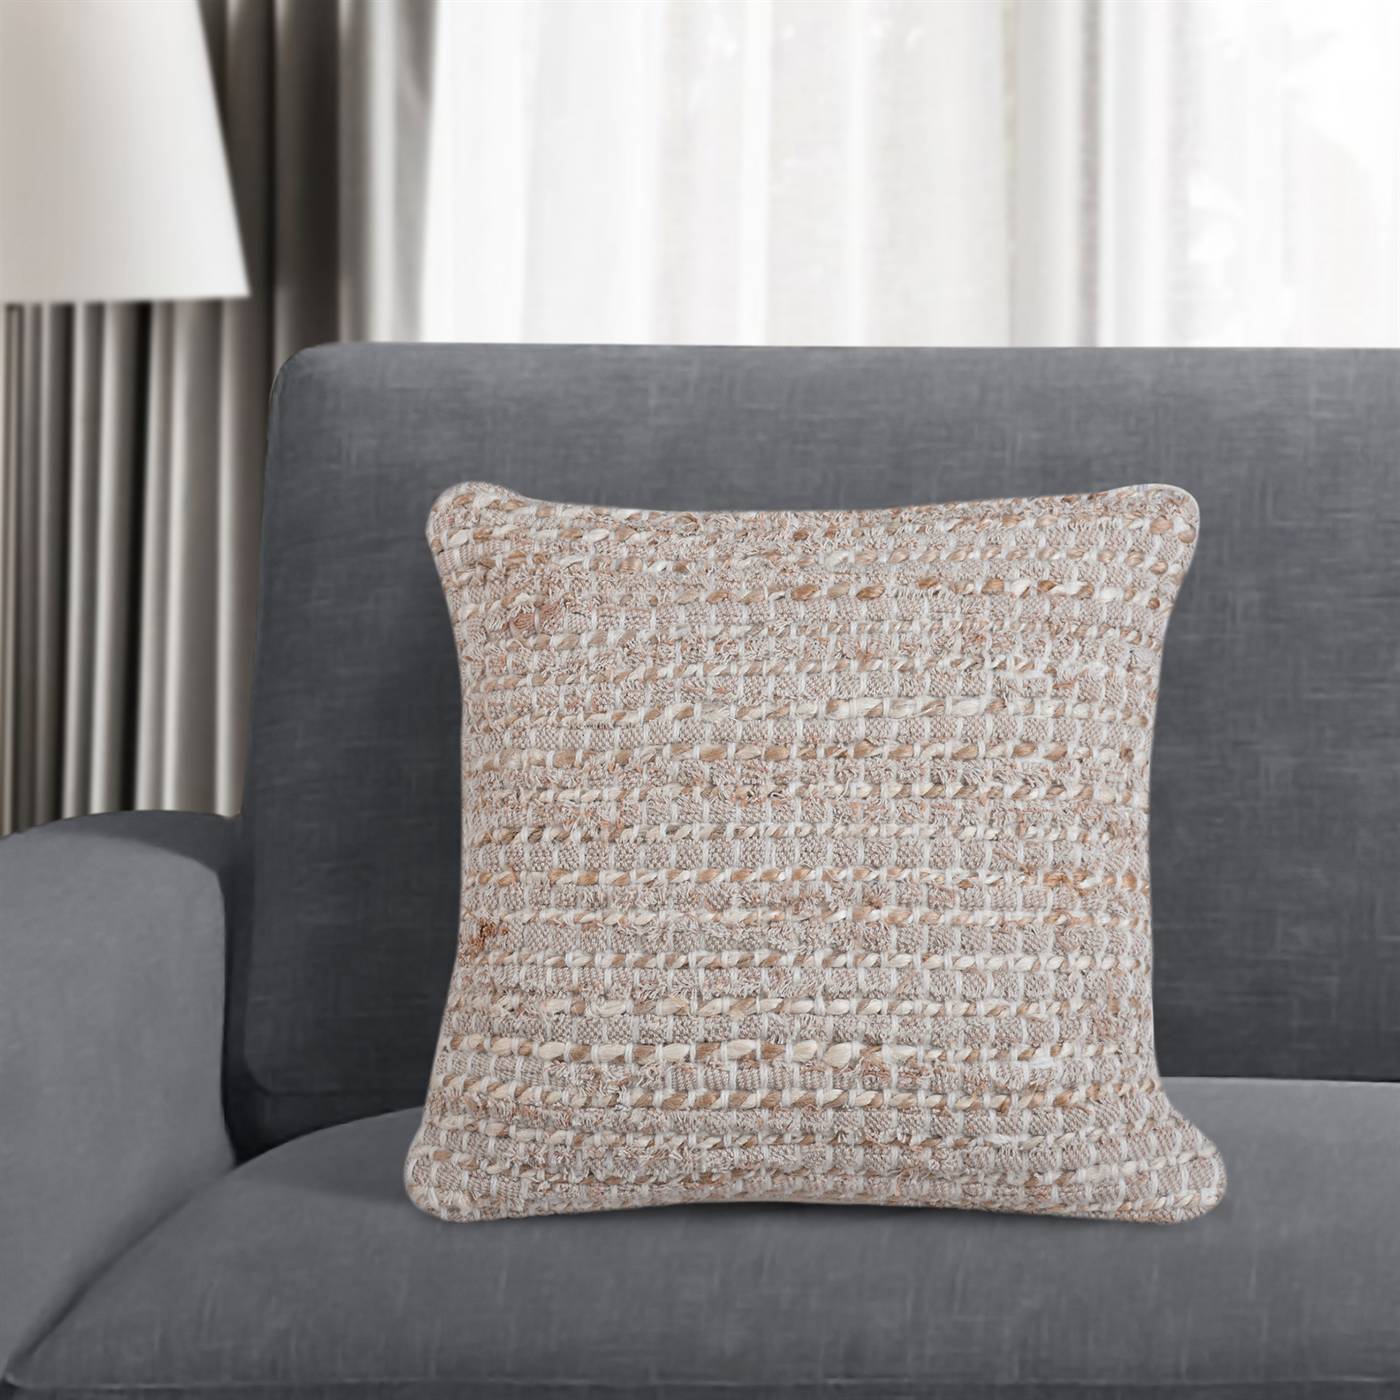 Koenig Cushion, 45x45 cm, Natural Natural White, Multi, Jute, Cotton, Hand Woven, Pitloom, Flat Weave 